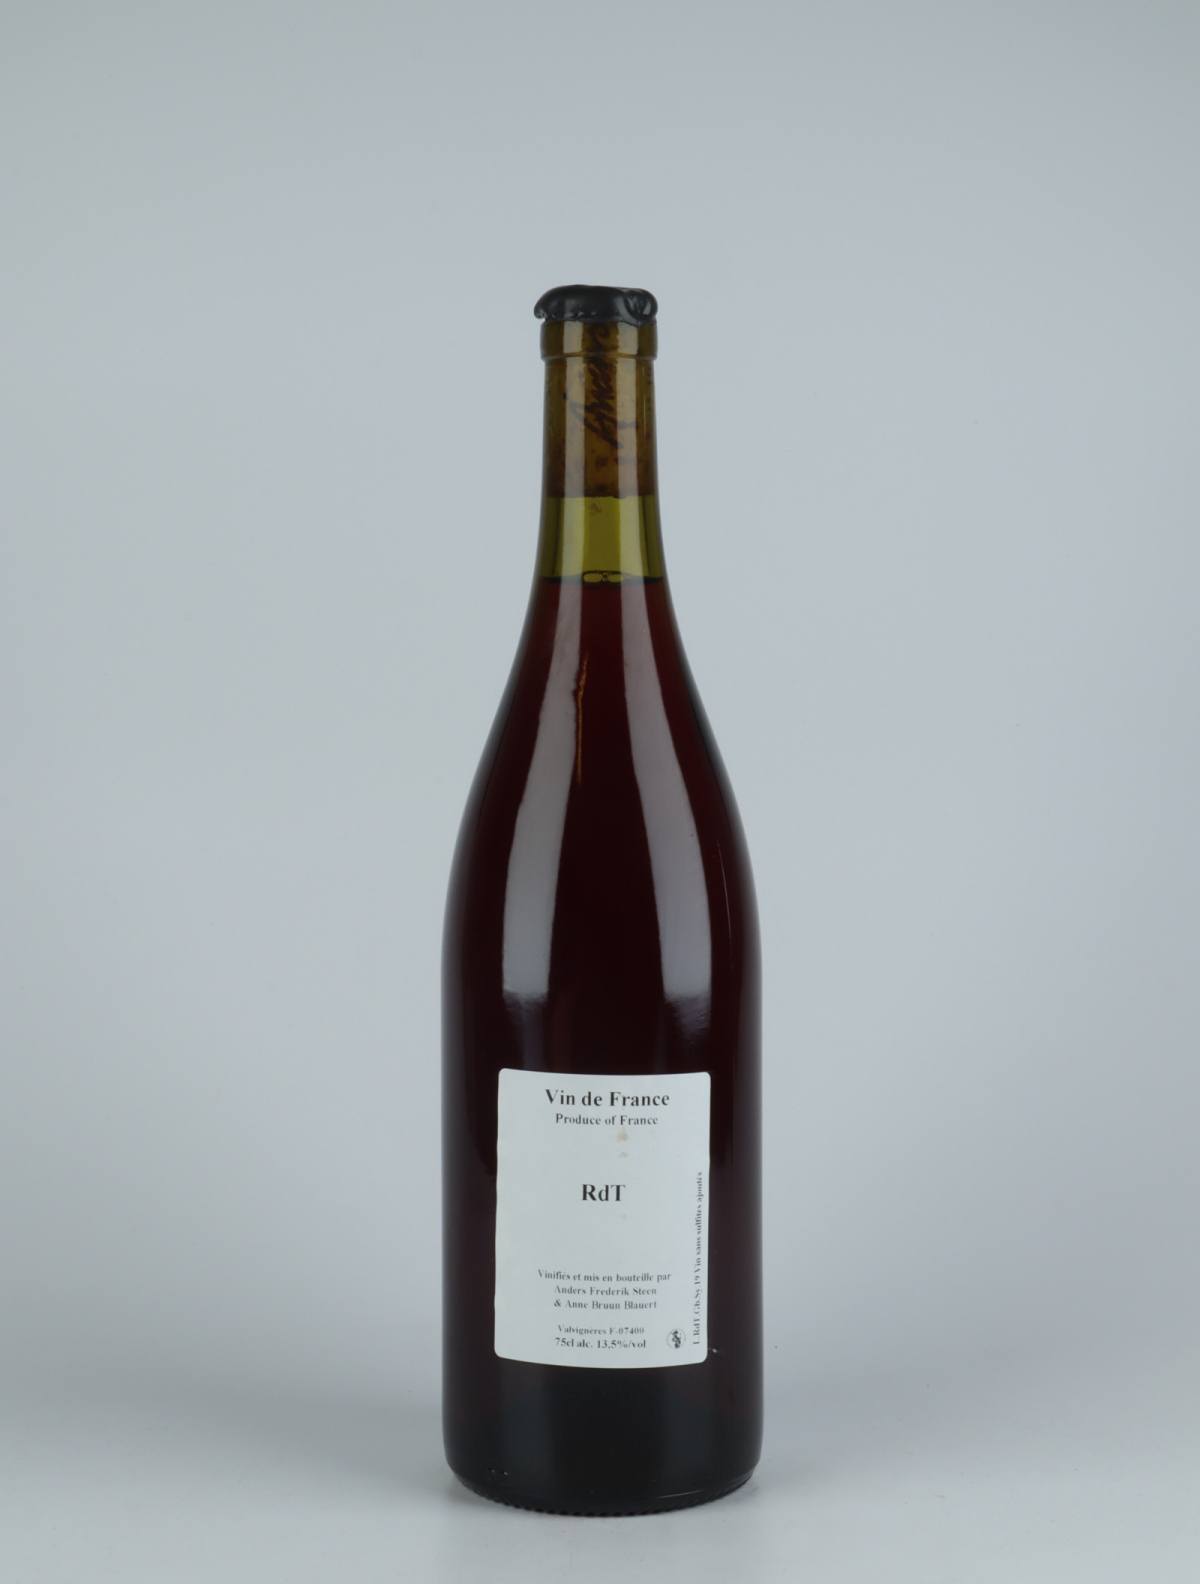 A bottle 2019 Rdt Red wine from Anders Frederik Steen & Anne Bruun Blauert, Ardèche in France